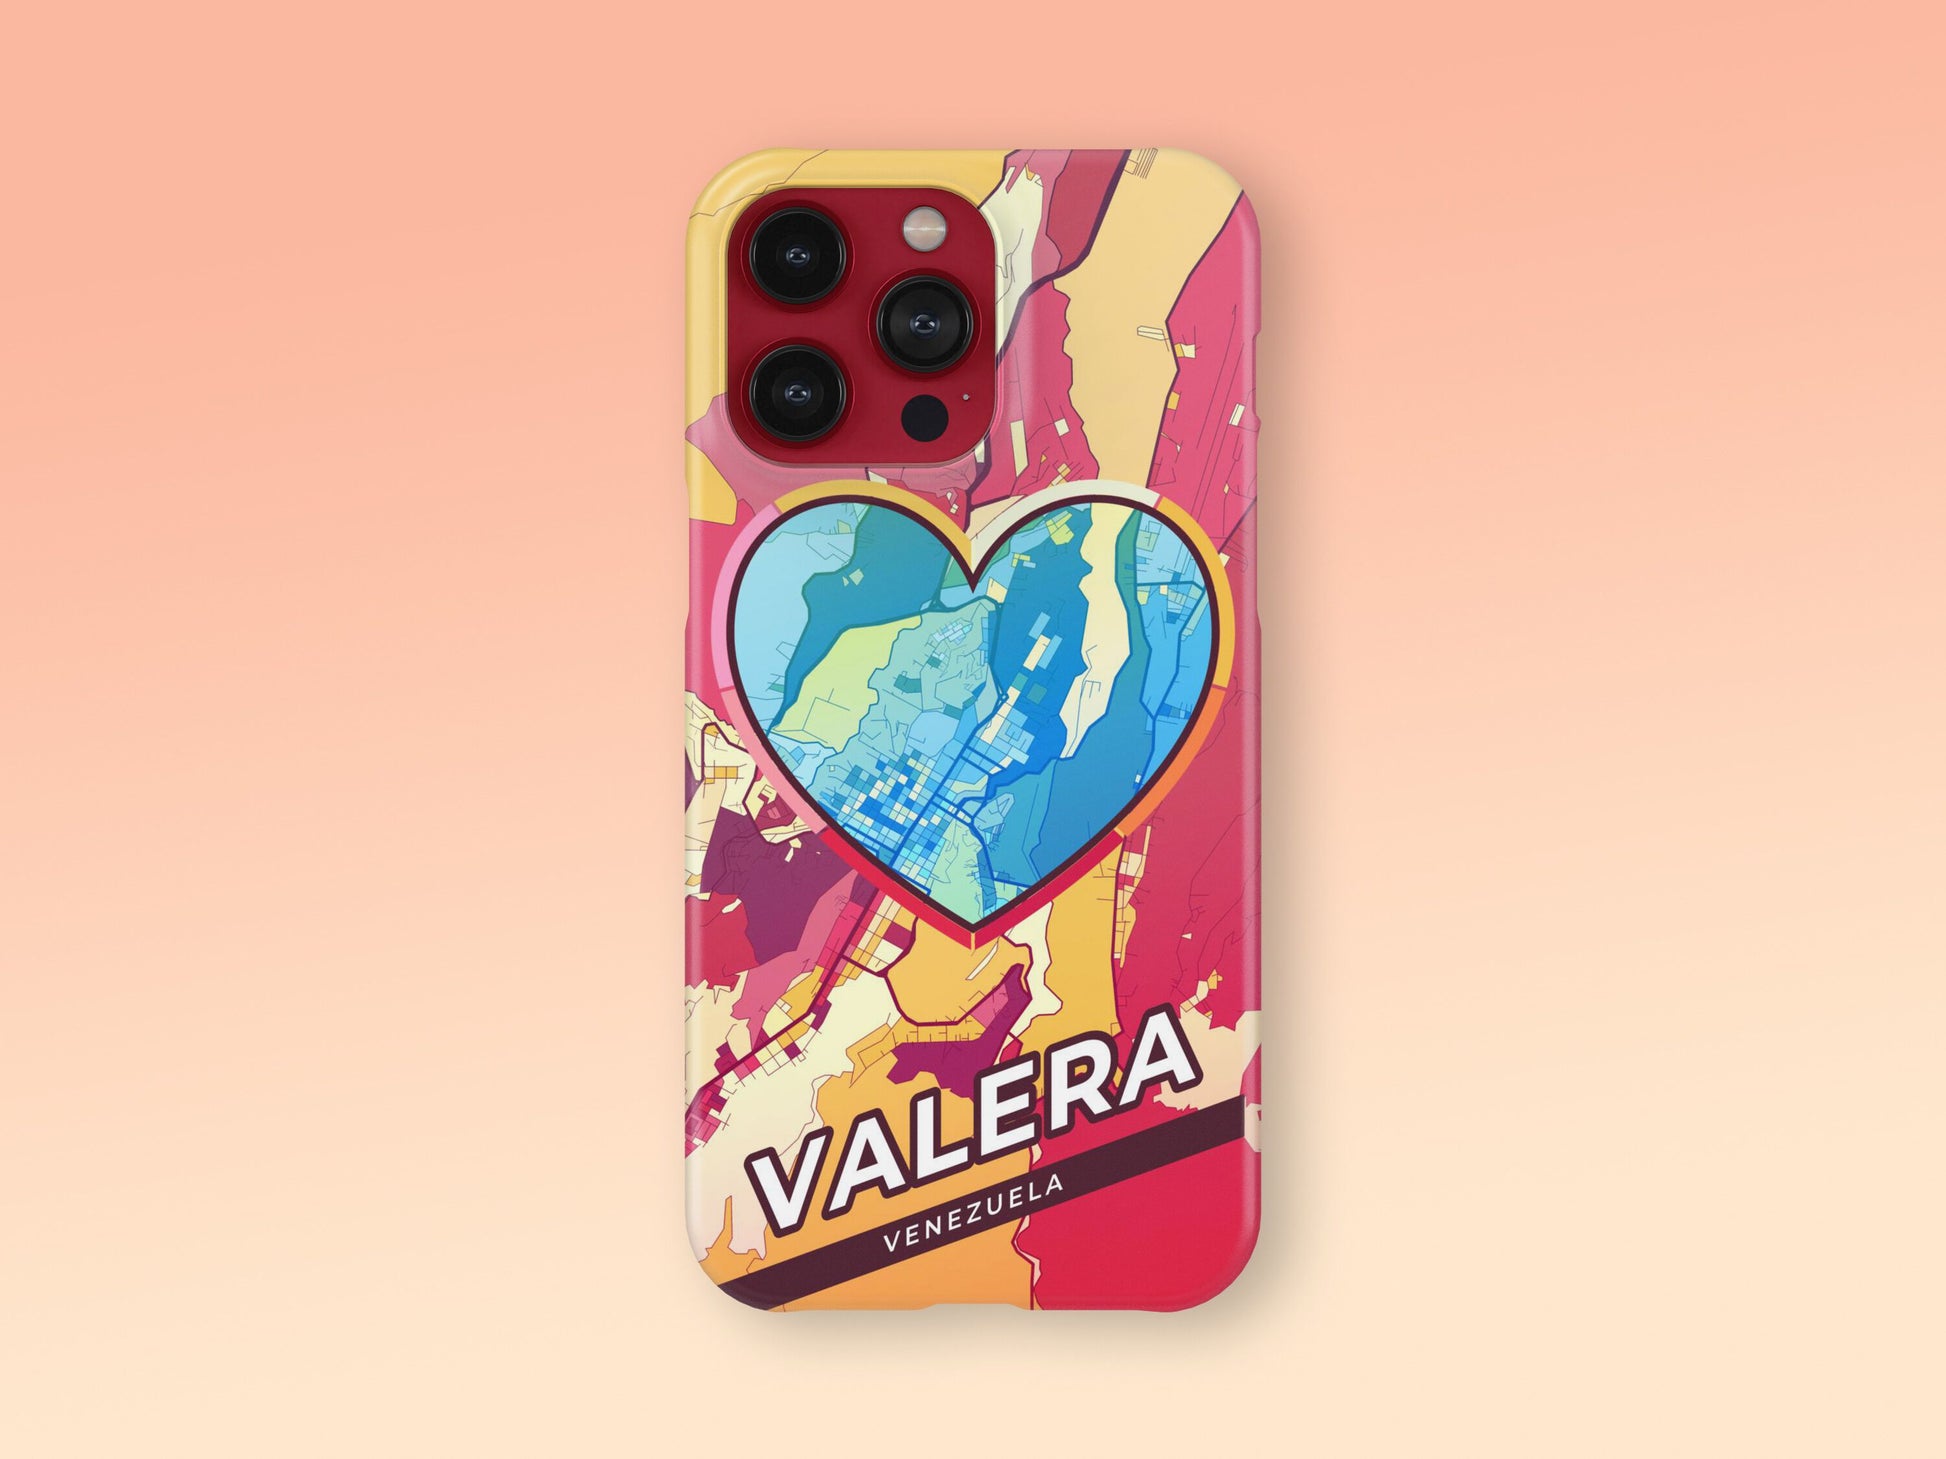 Valera Venezuela slim phone case with colorful icon. Birthday, wedding or housewarming gift. Couple match cases. 2